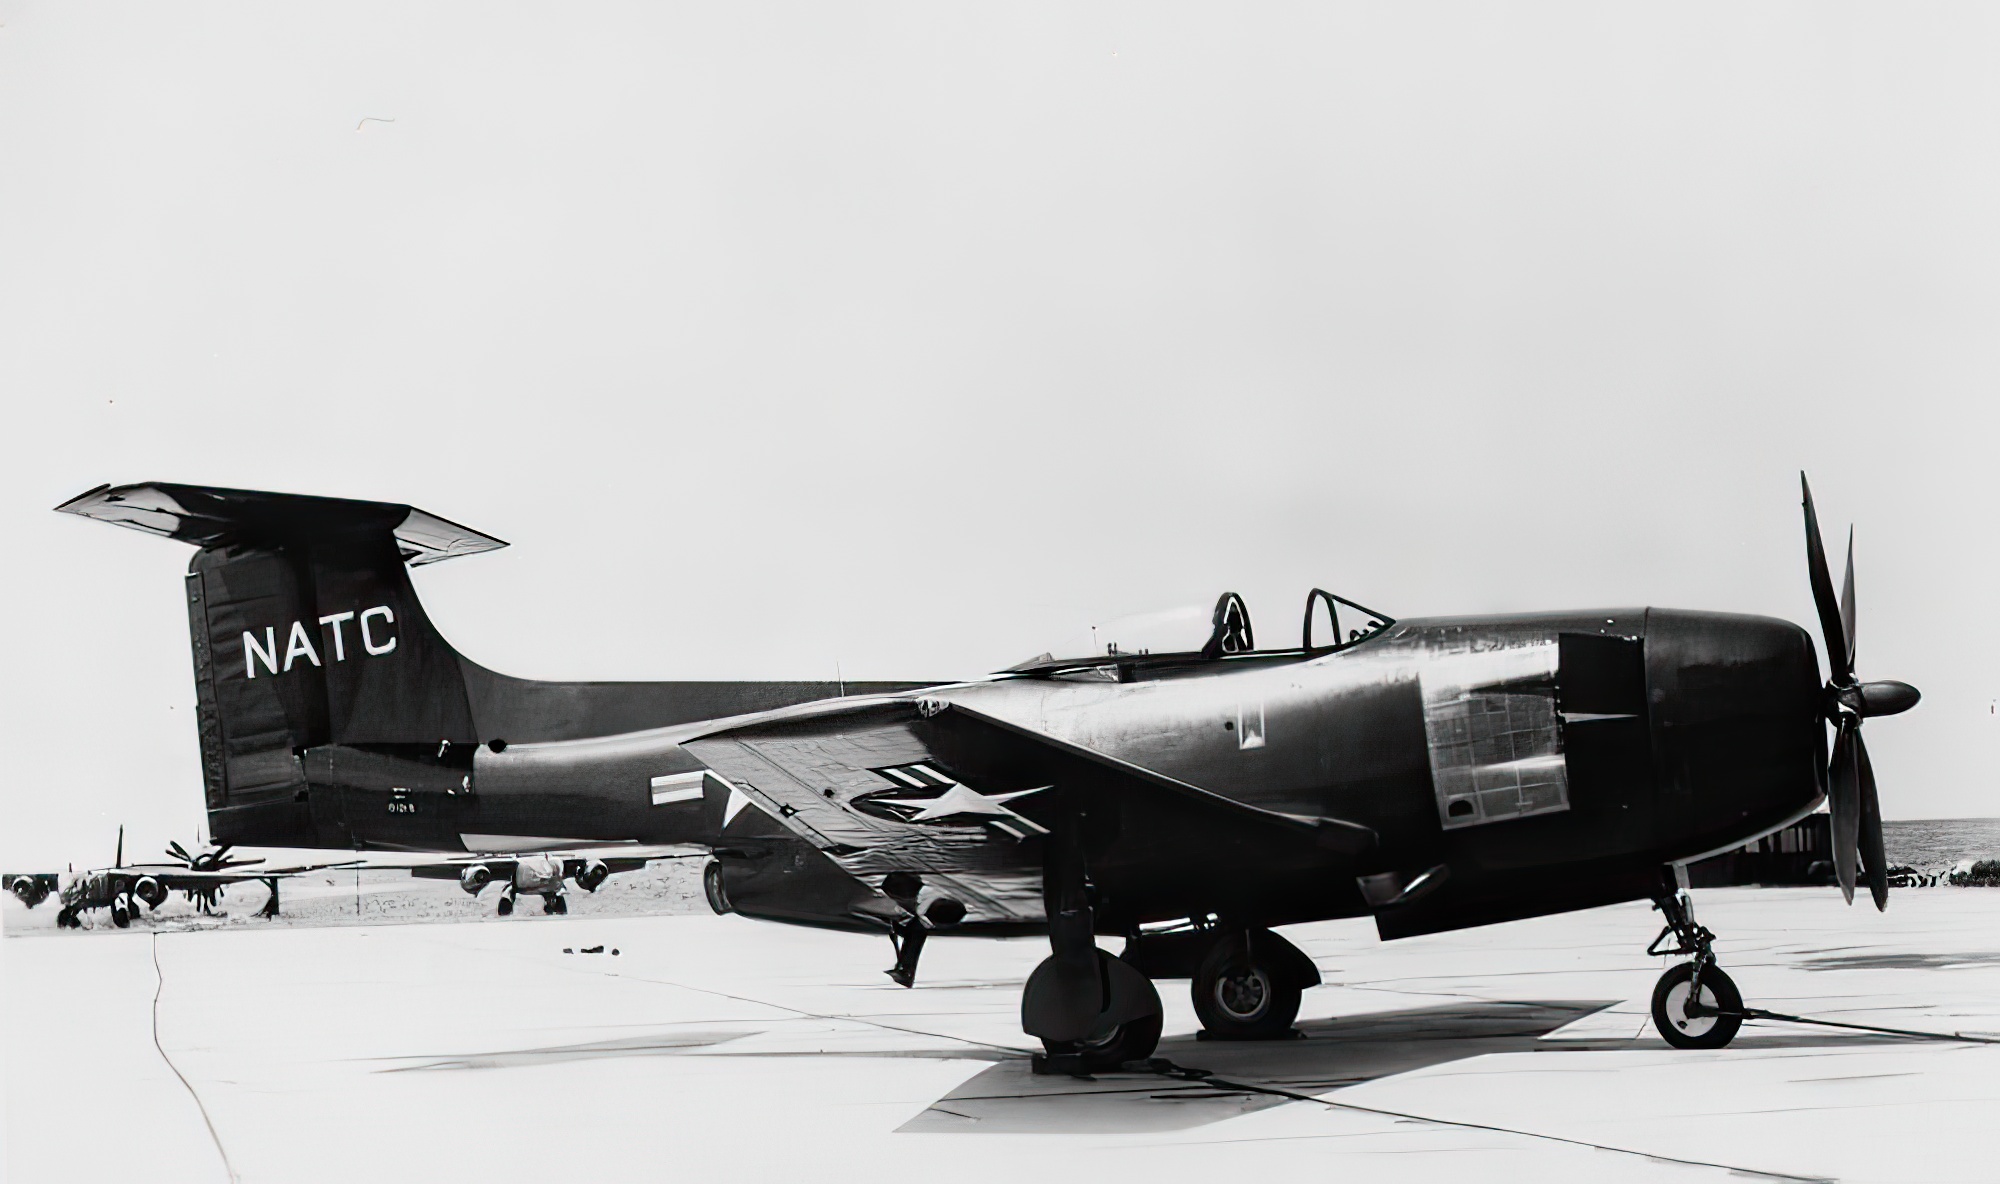 Curtiss XF15C-1